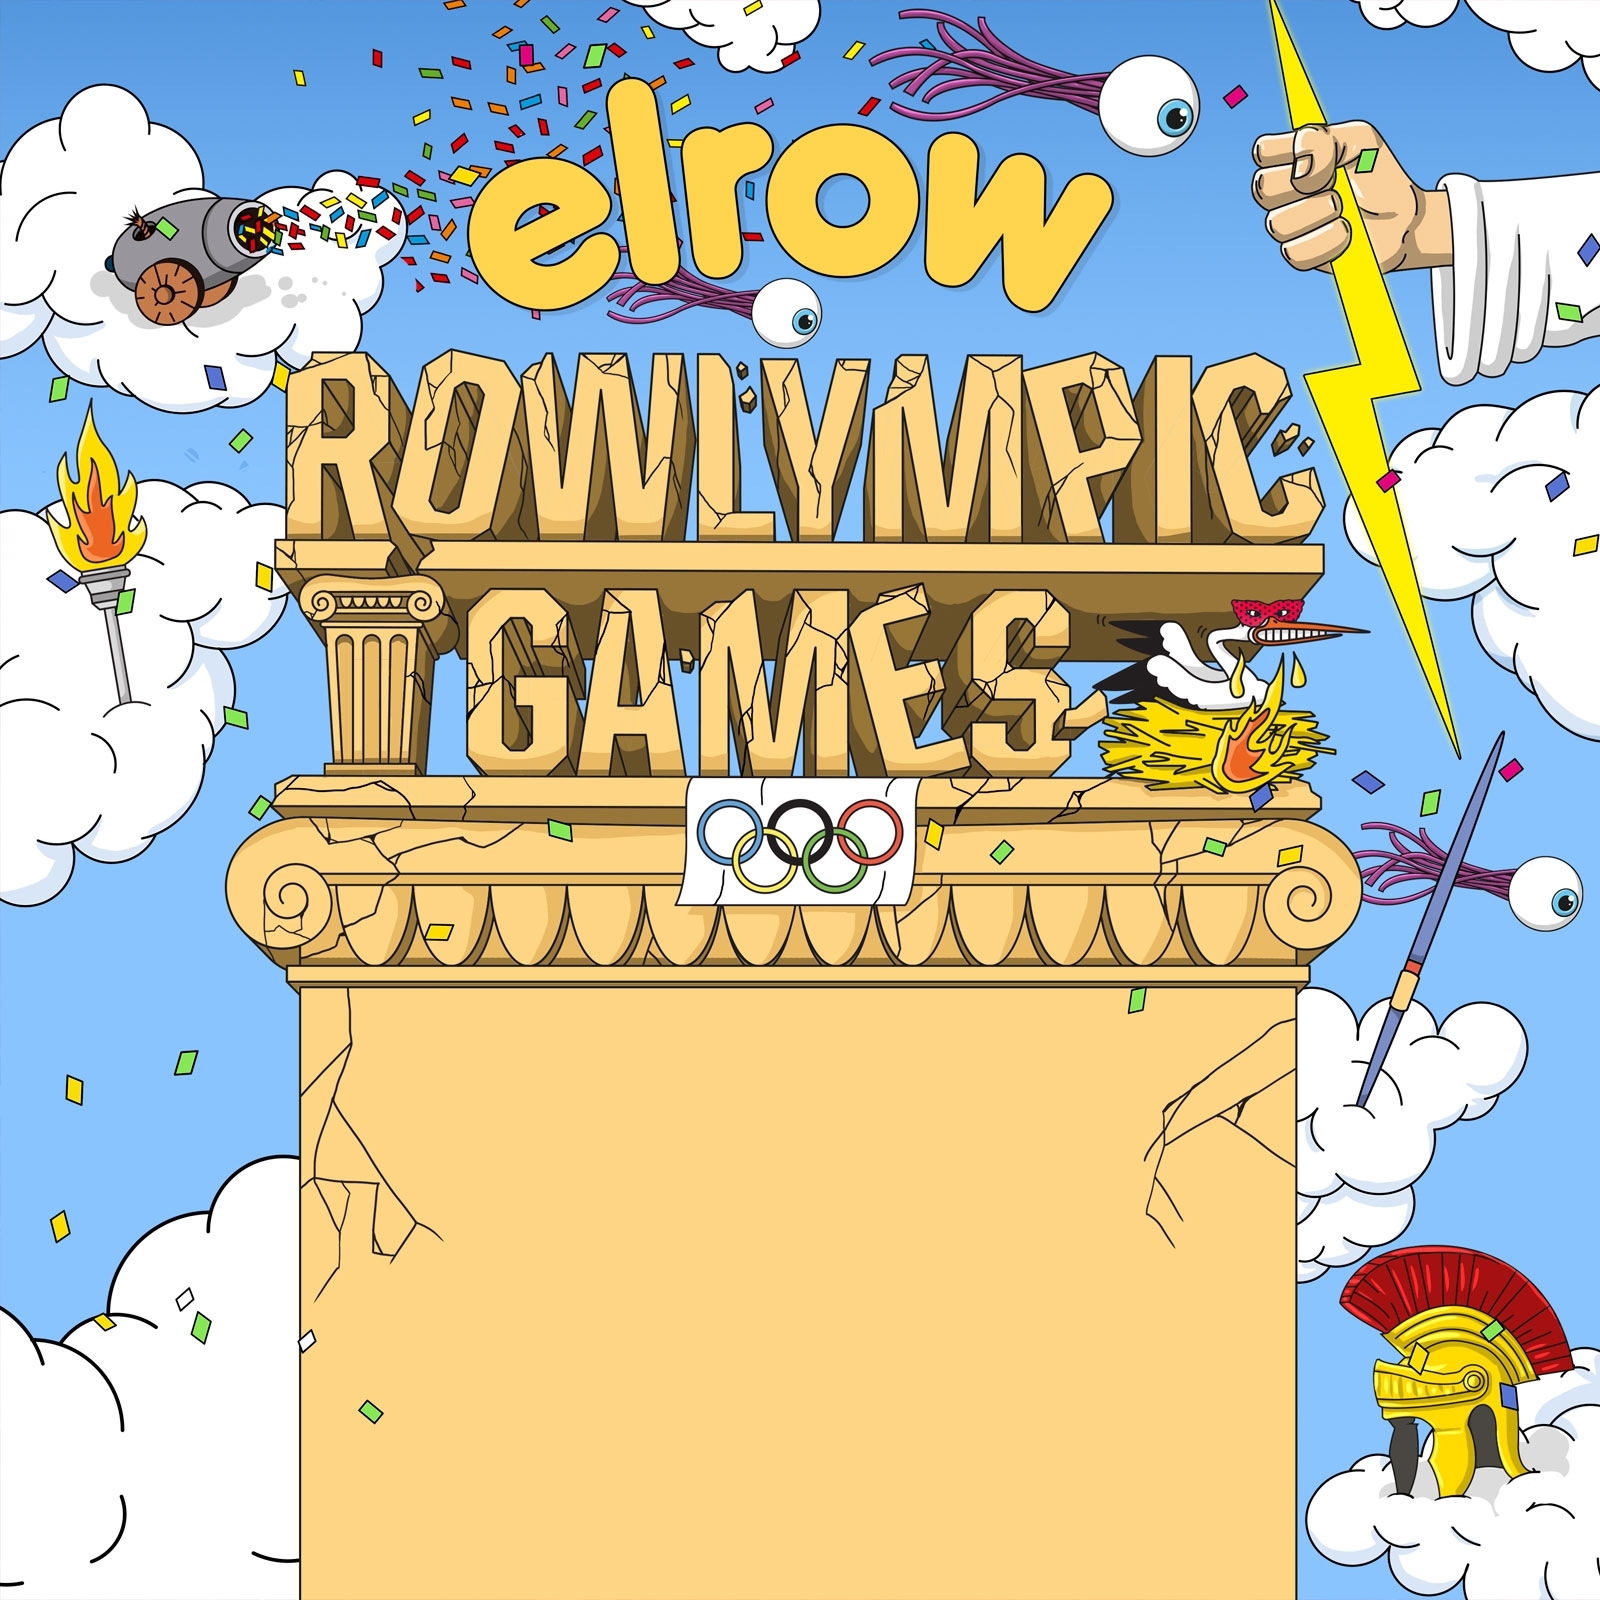 Rowlympic games